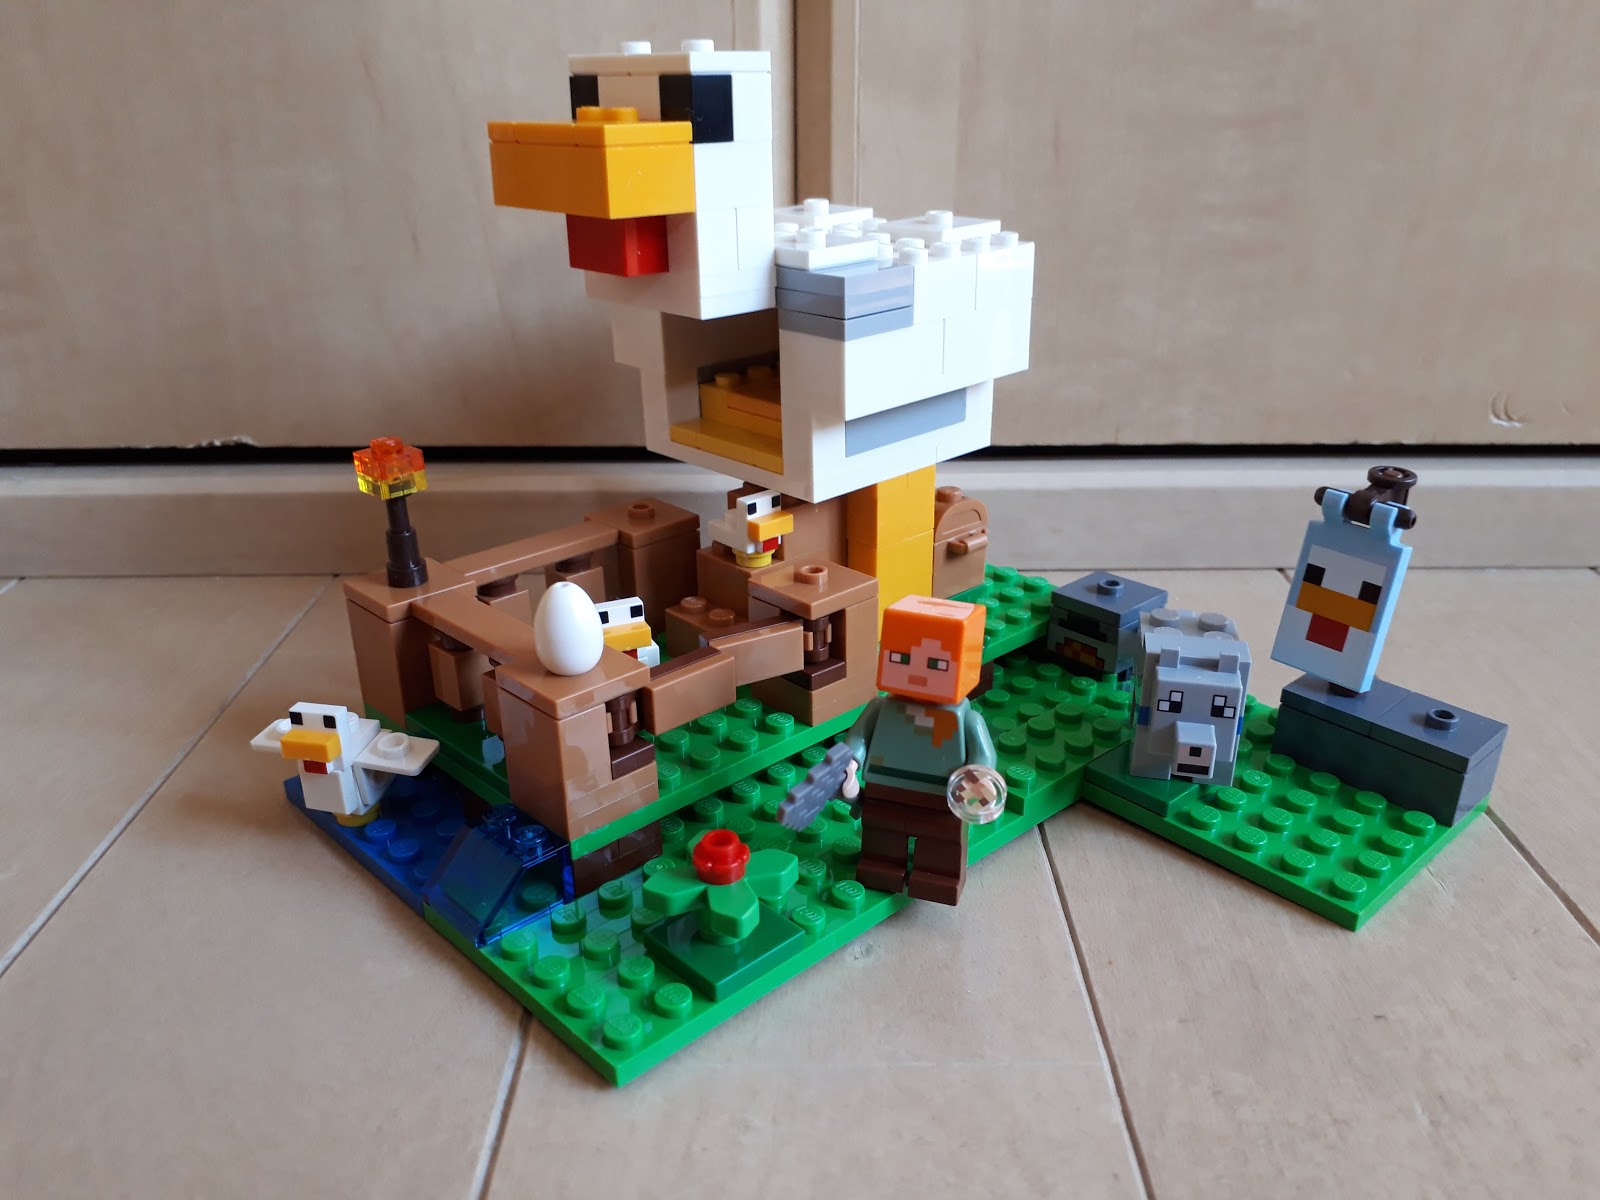 Lego レゴ マインクラフト ニワトリ小屋 レビュー なま1428のポケモンgo Hobbyworld